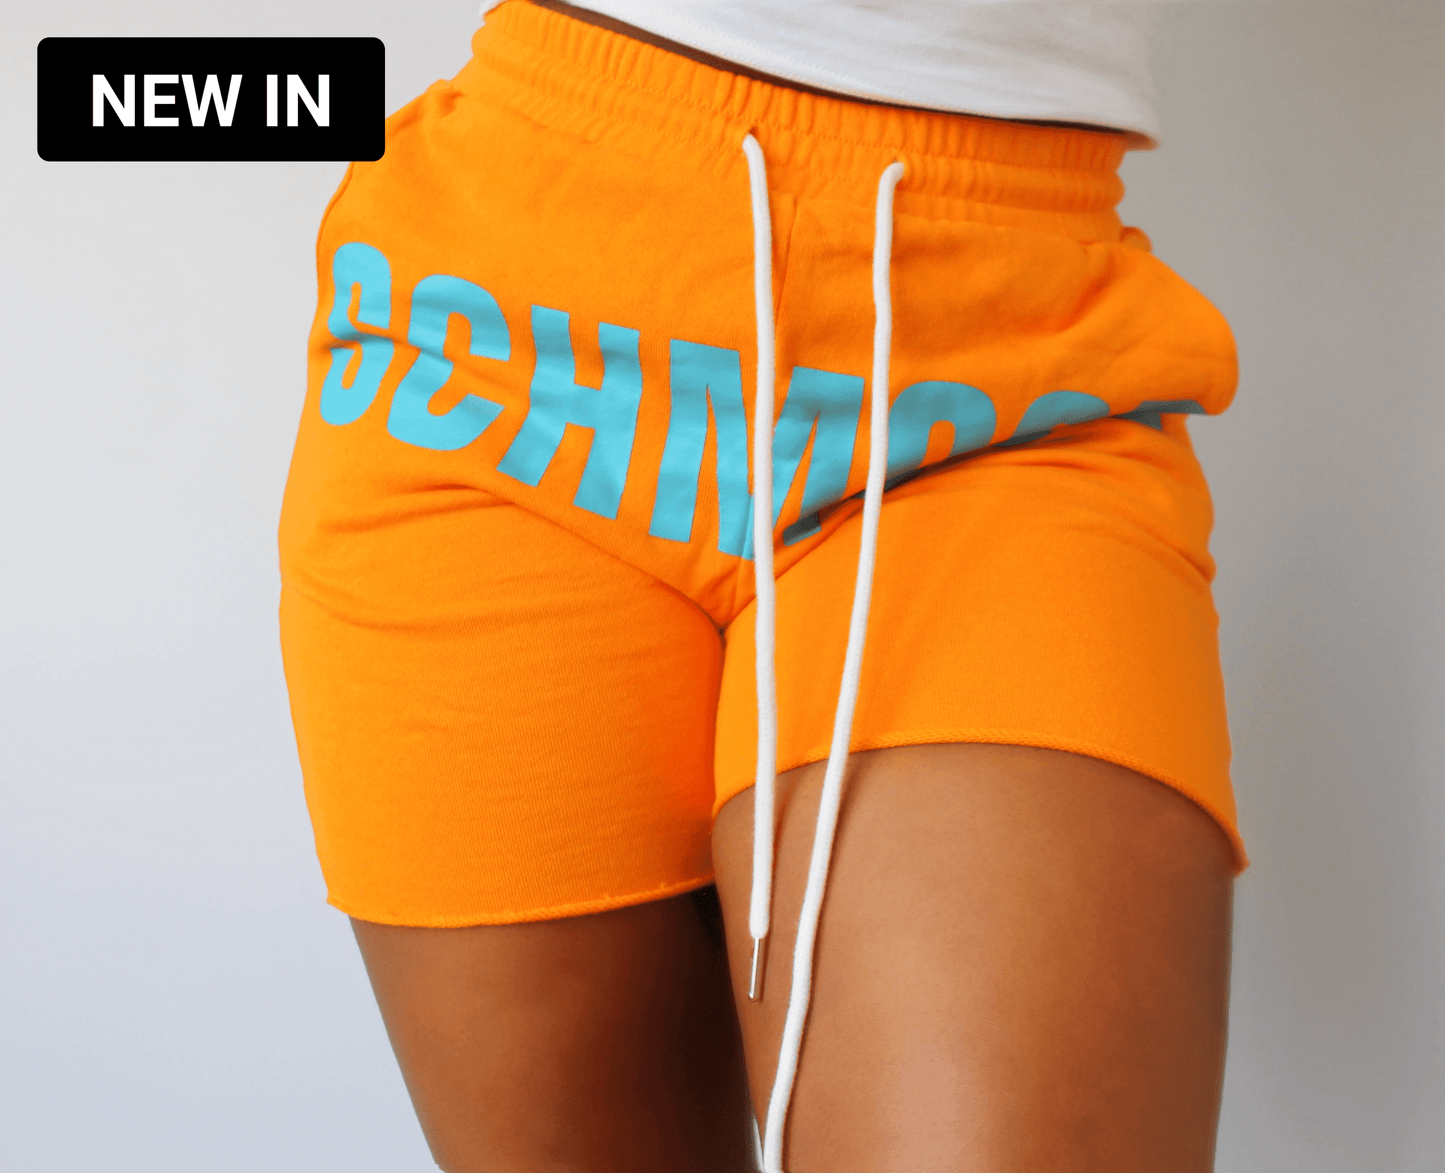 SCHMOOD Sweat Shorts - Citrus Orange/Turquoise